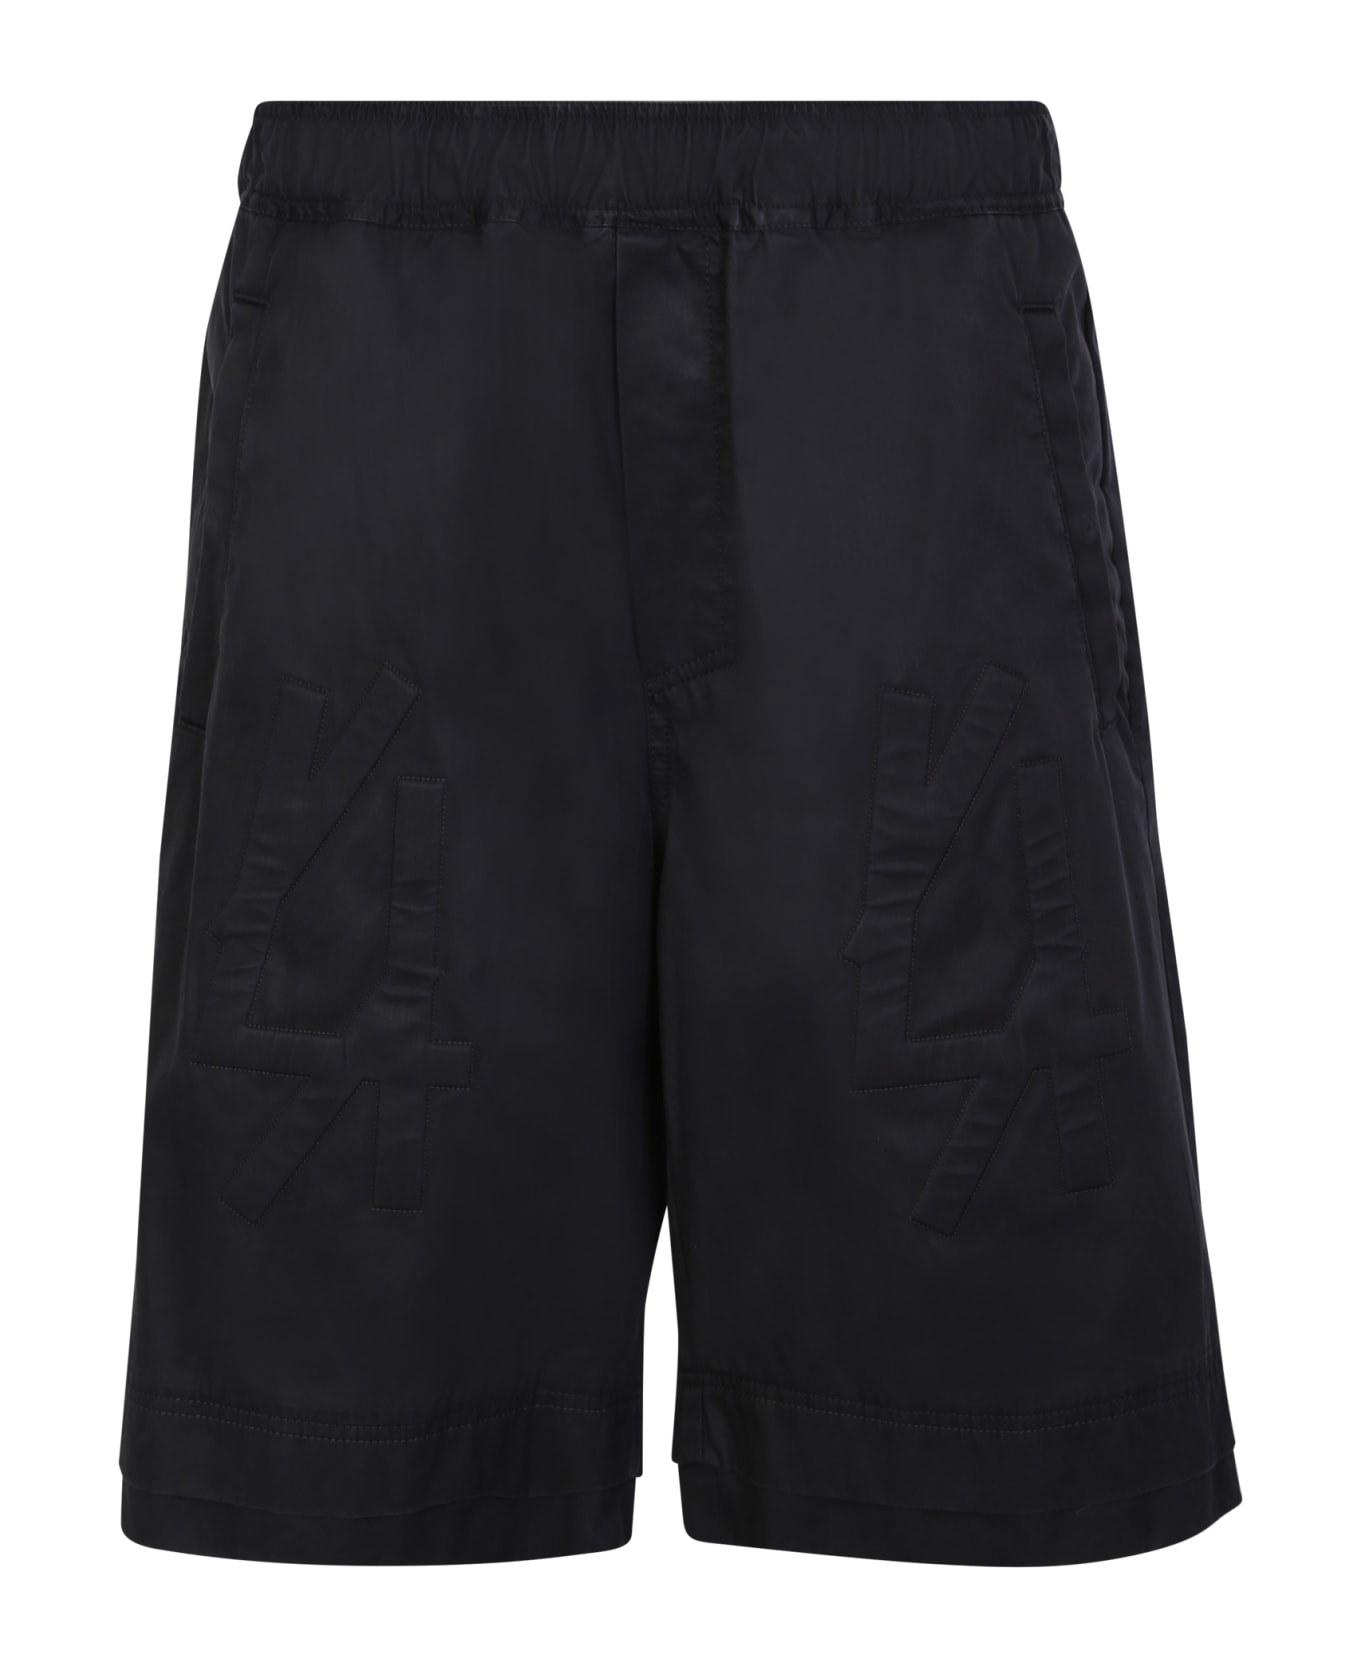 44 Label Group Embossed-logo Shorts - Black ショートパンツ